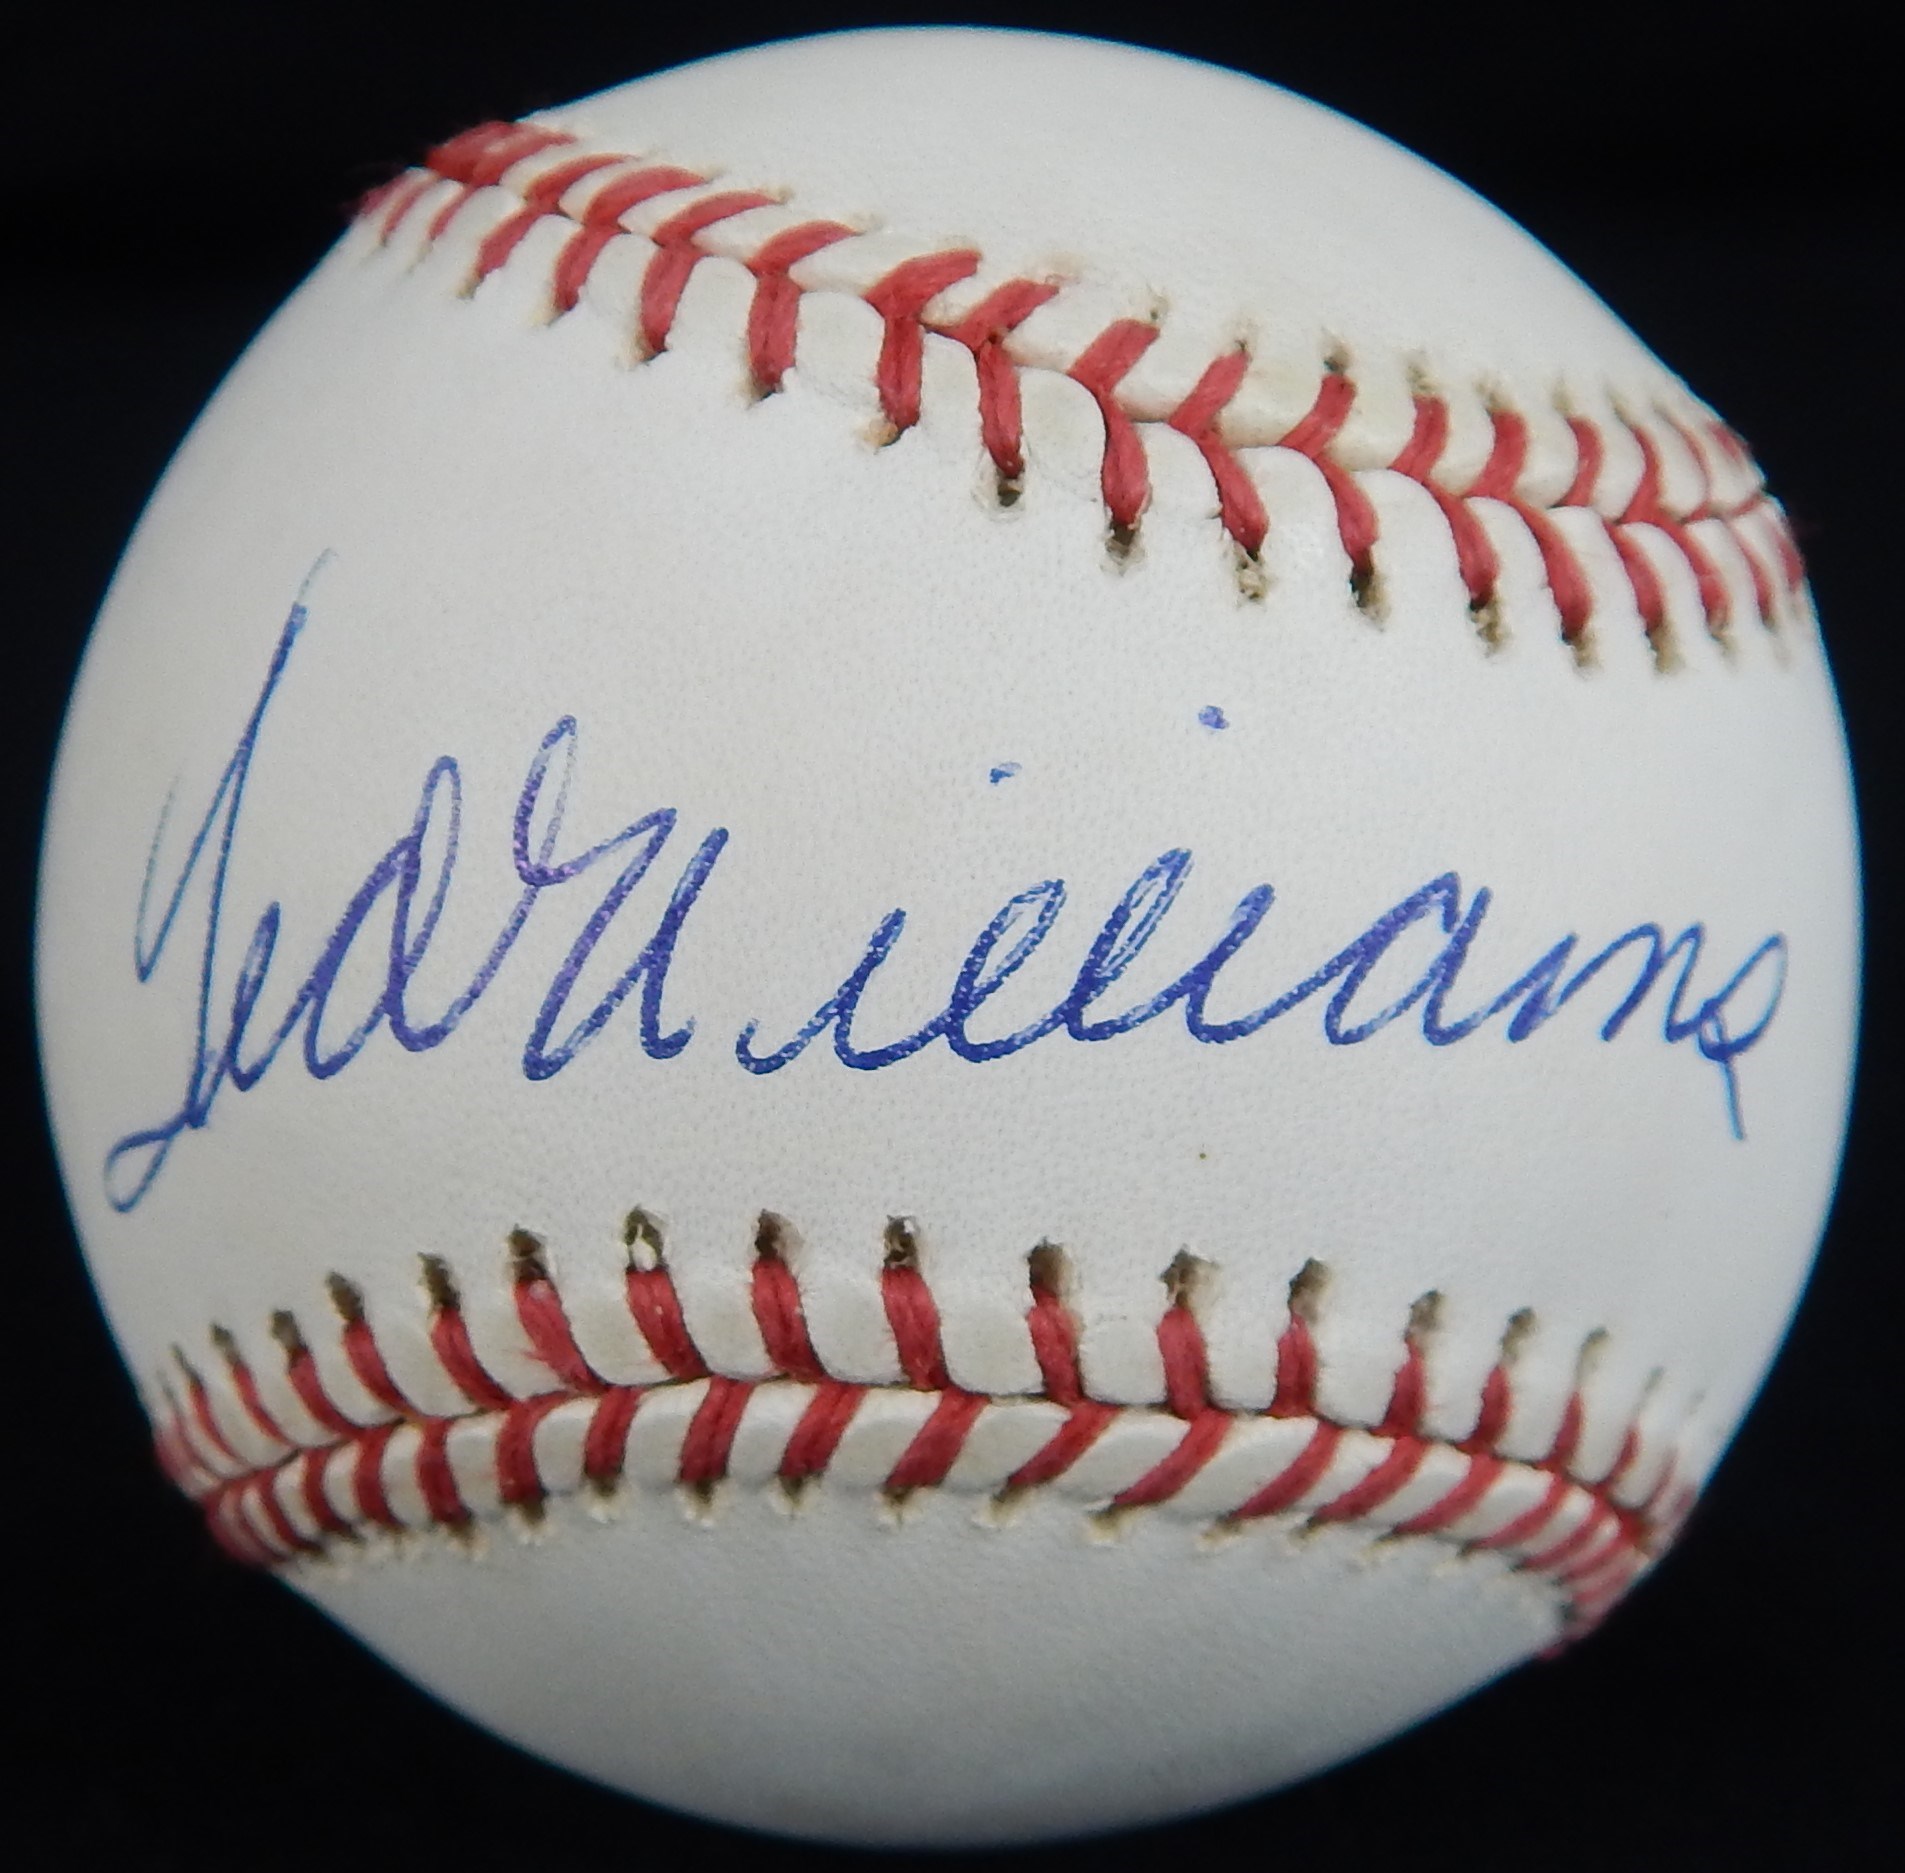 - Ted Williams Single Signed Baseball